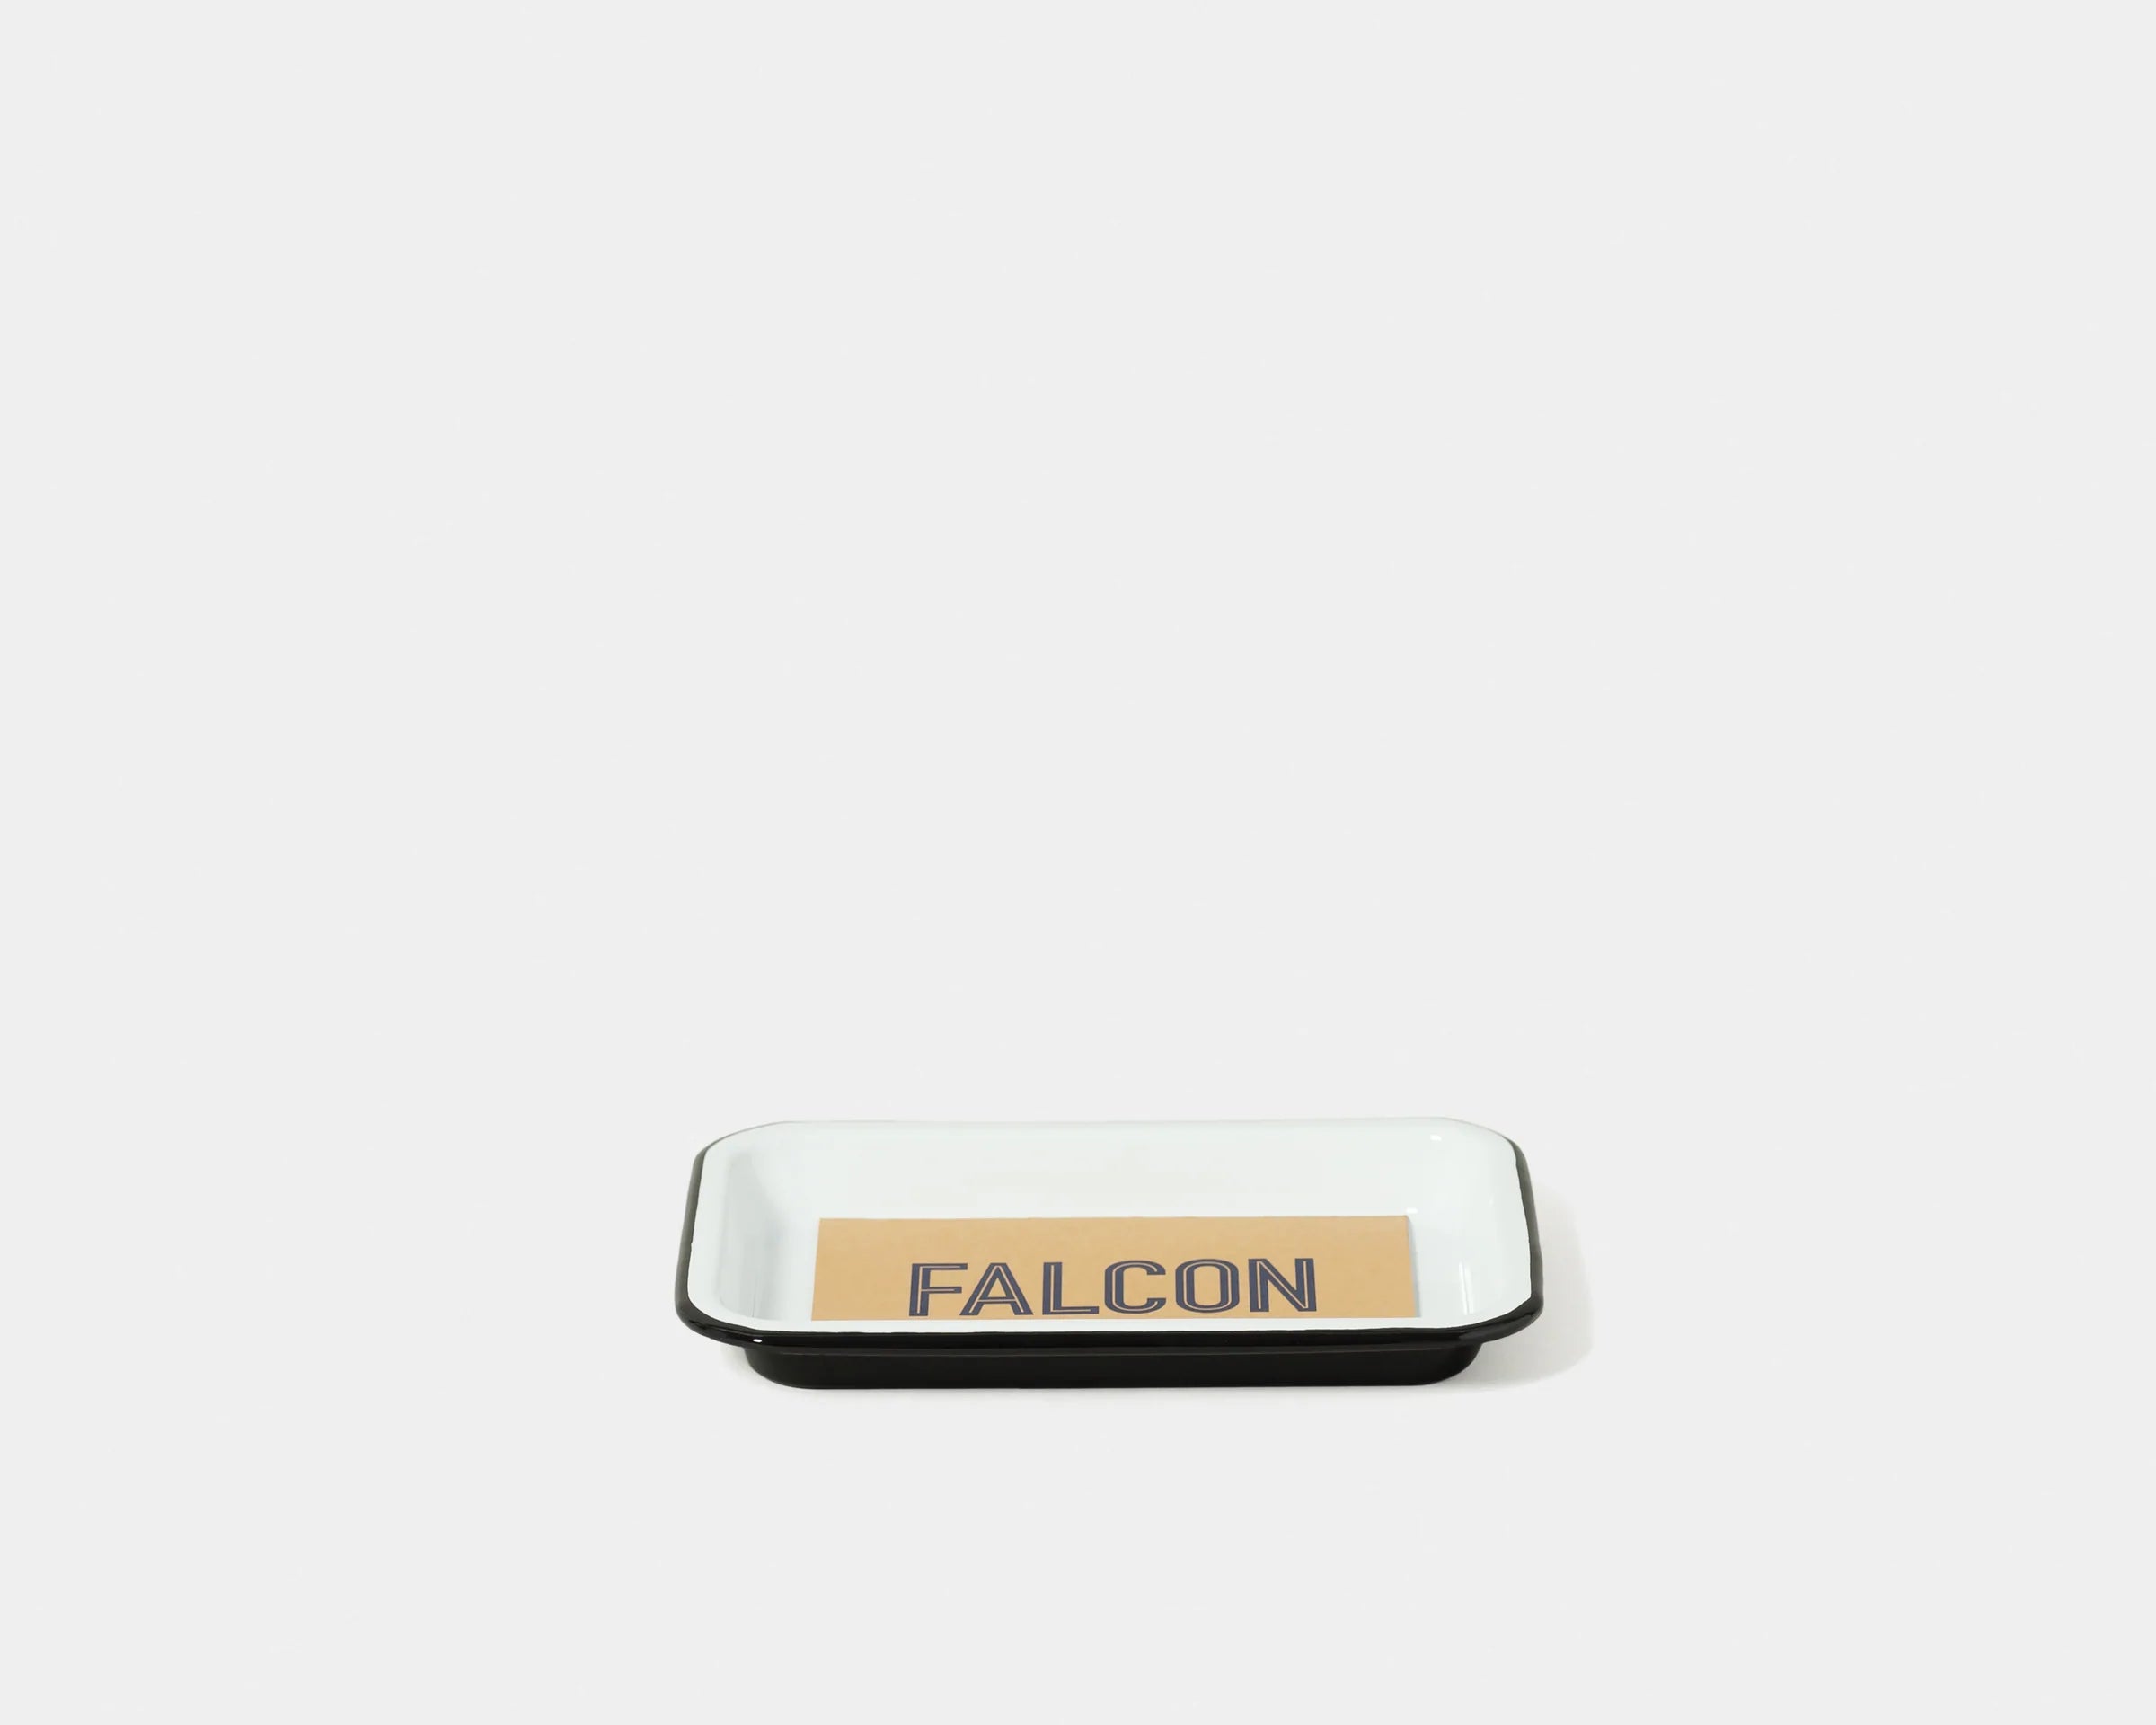 Falcon Enamelware Small Tray - Black Rim